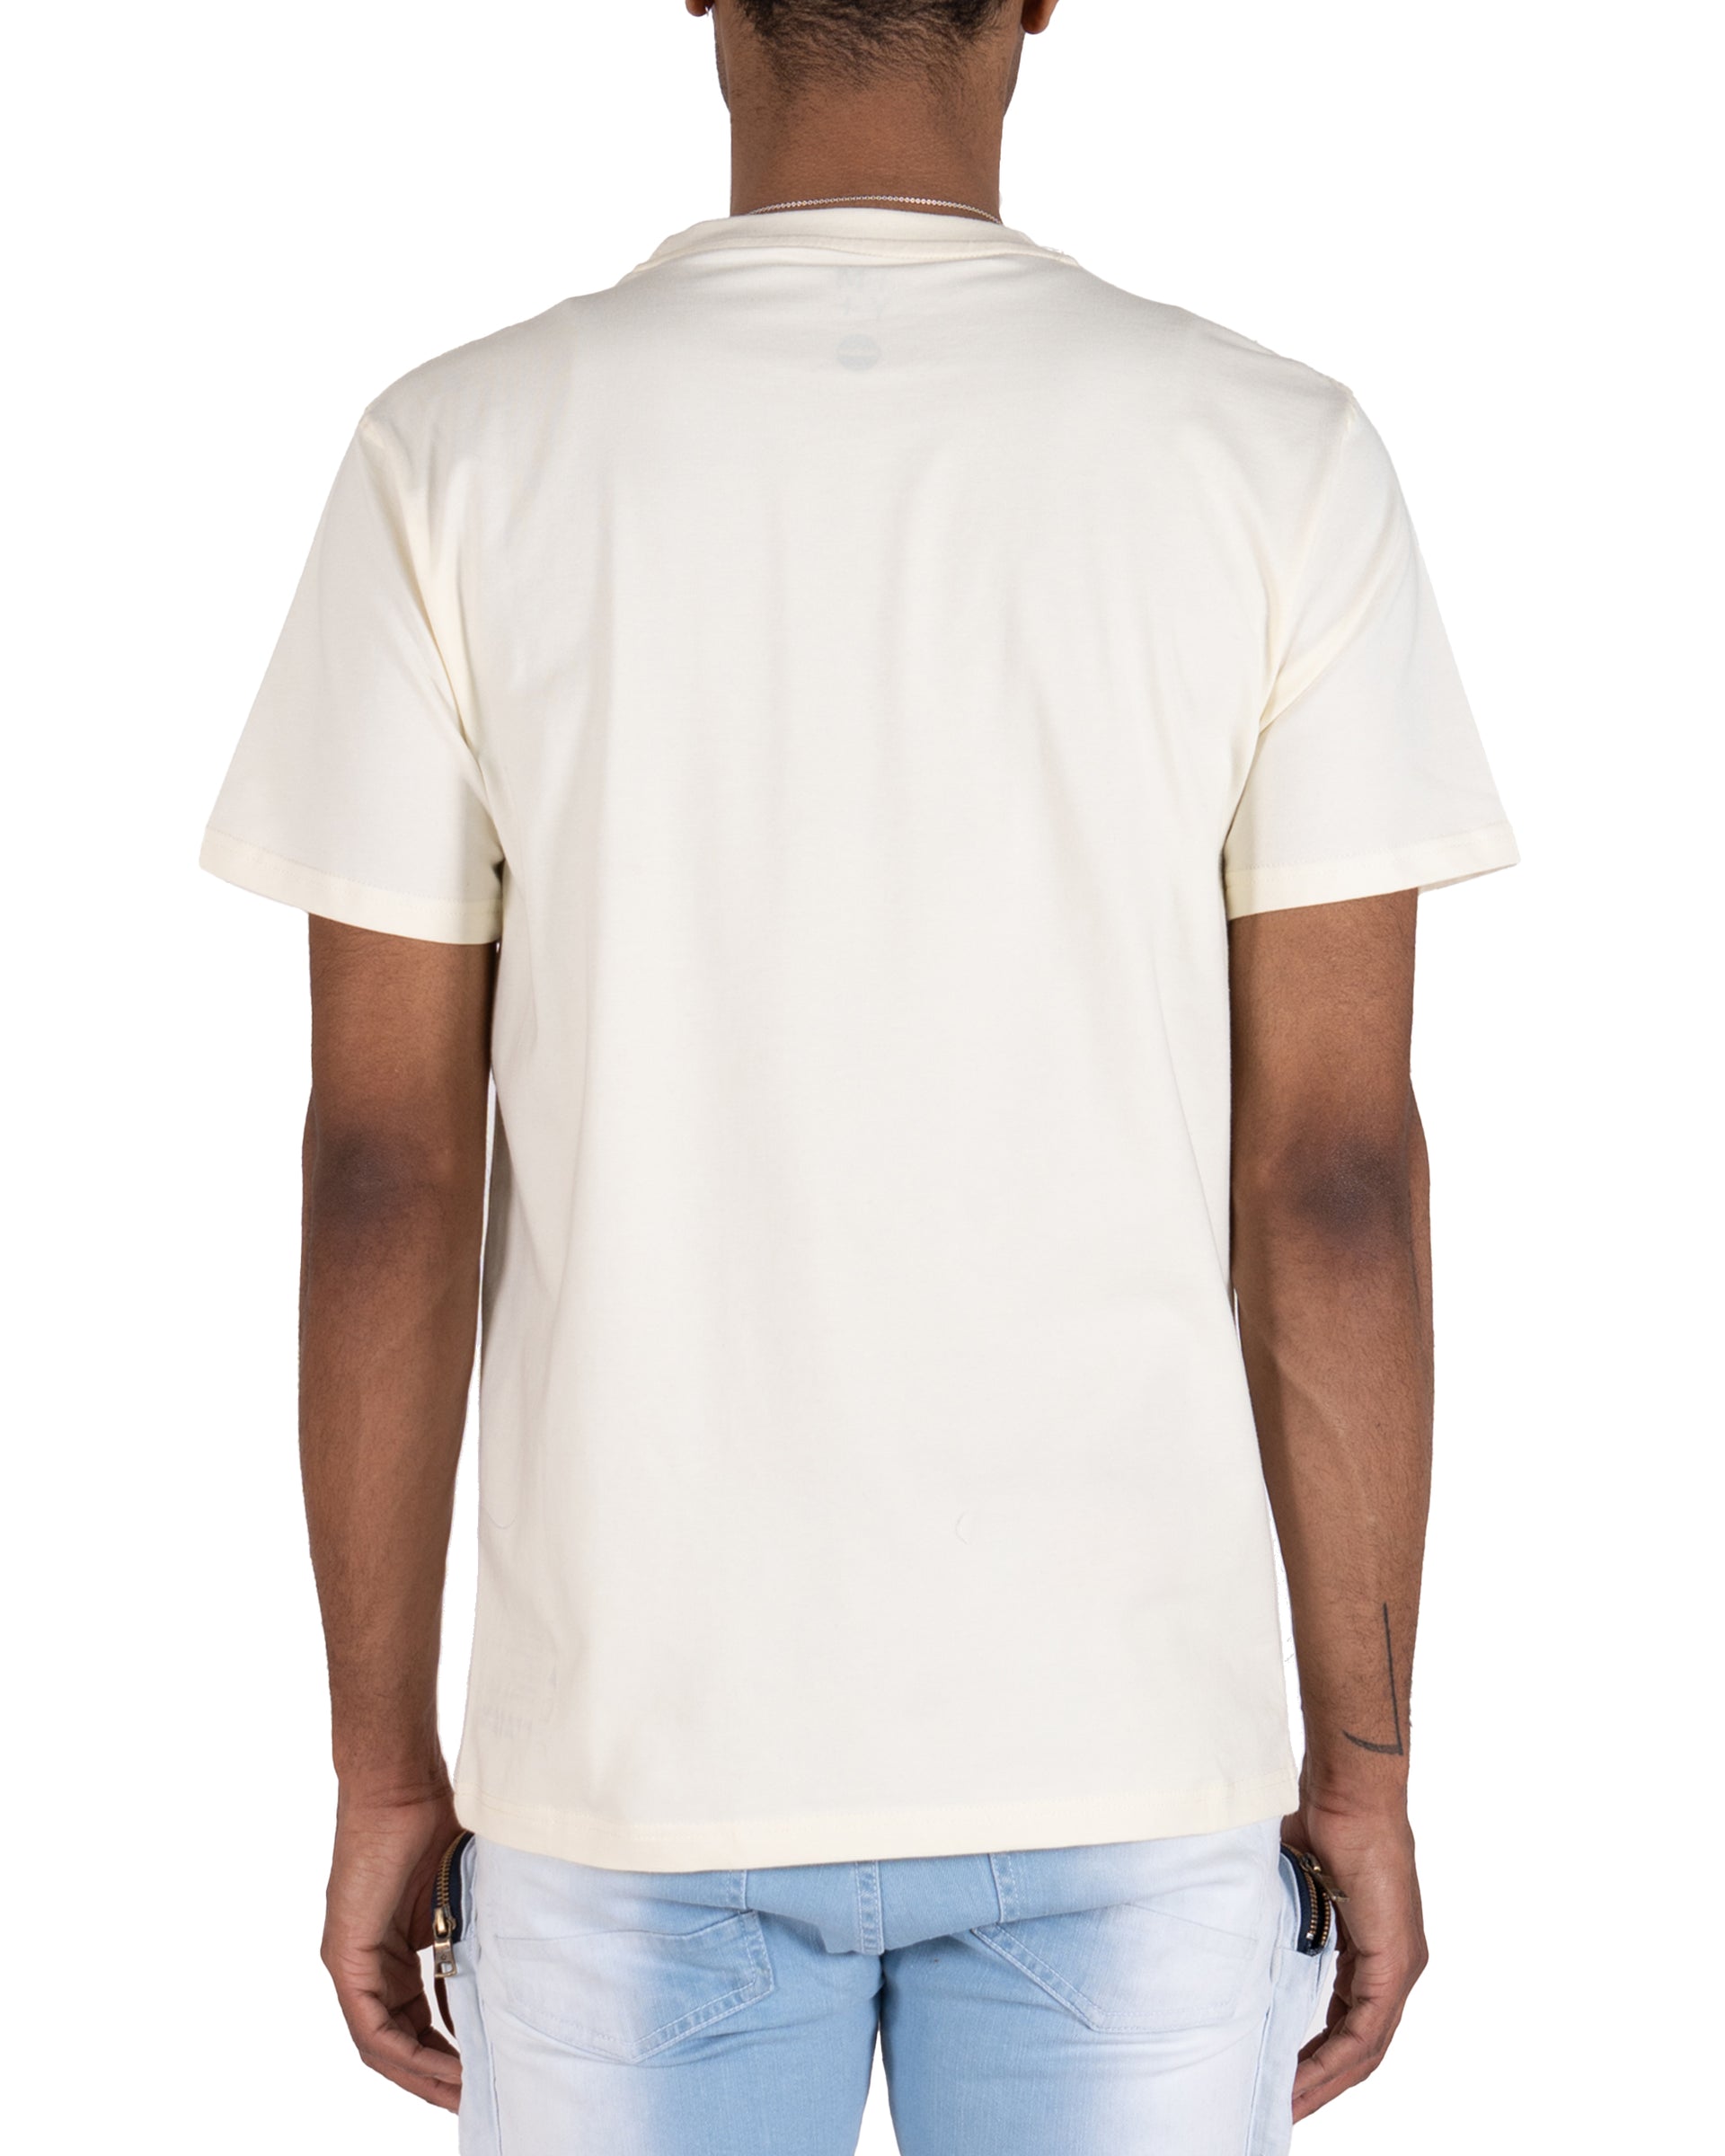 Men's "Money on Lock" Graphic T-Shirt | Ivory